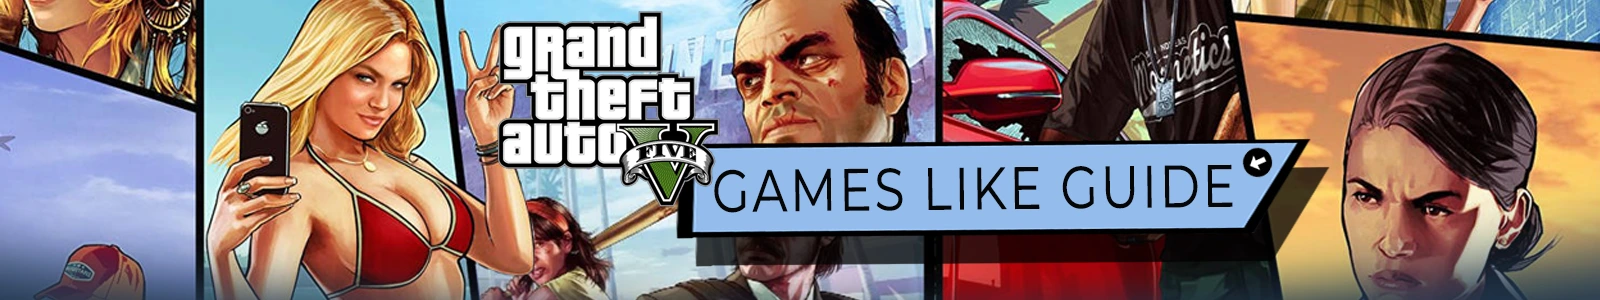 Buy Grand Theft Auto V (GTA 5) Rockstar Game PC CD-Key